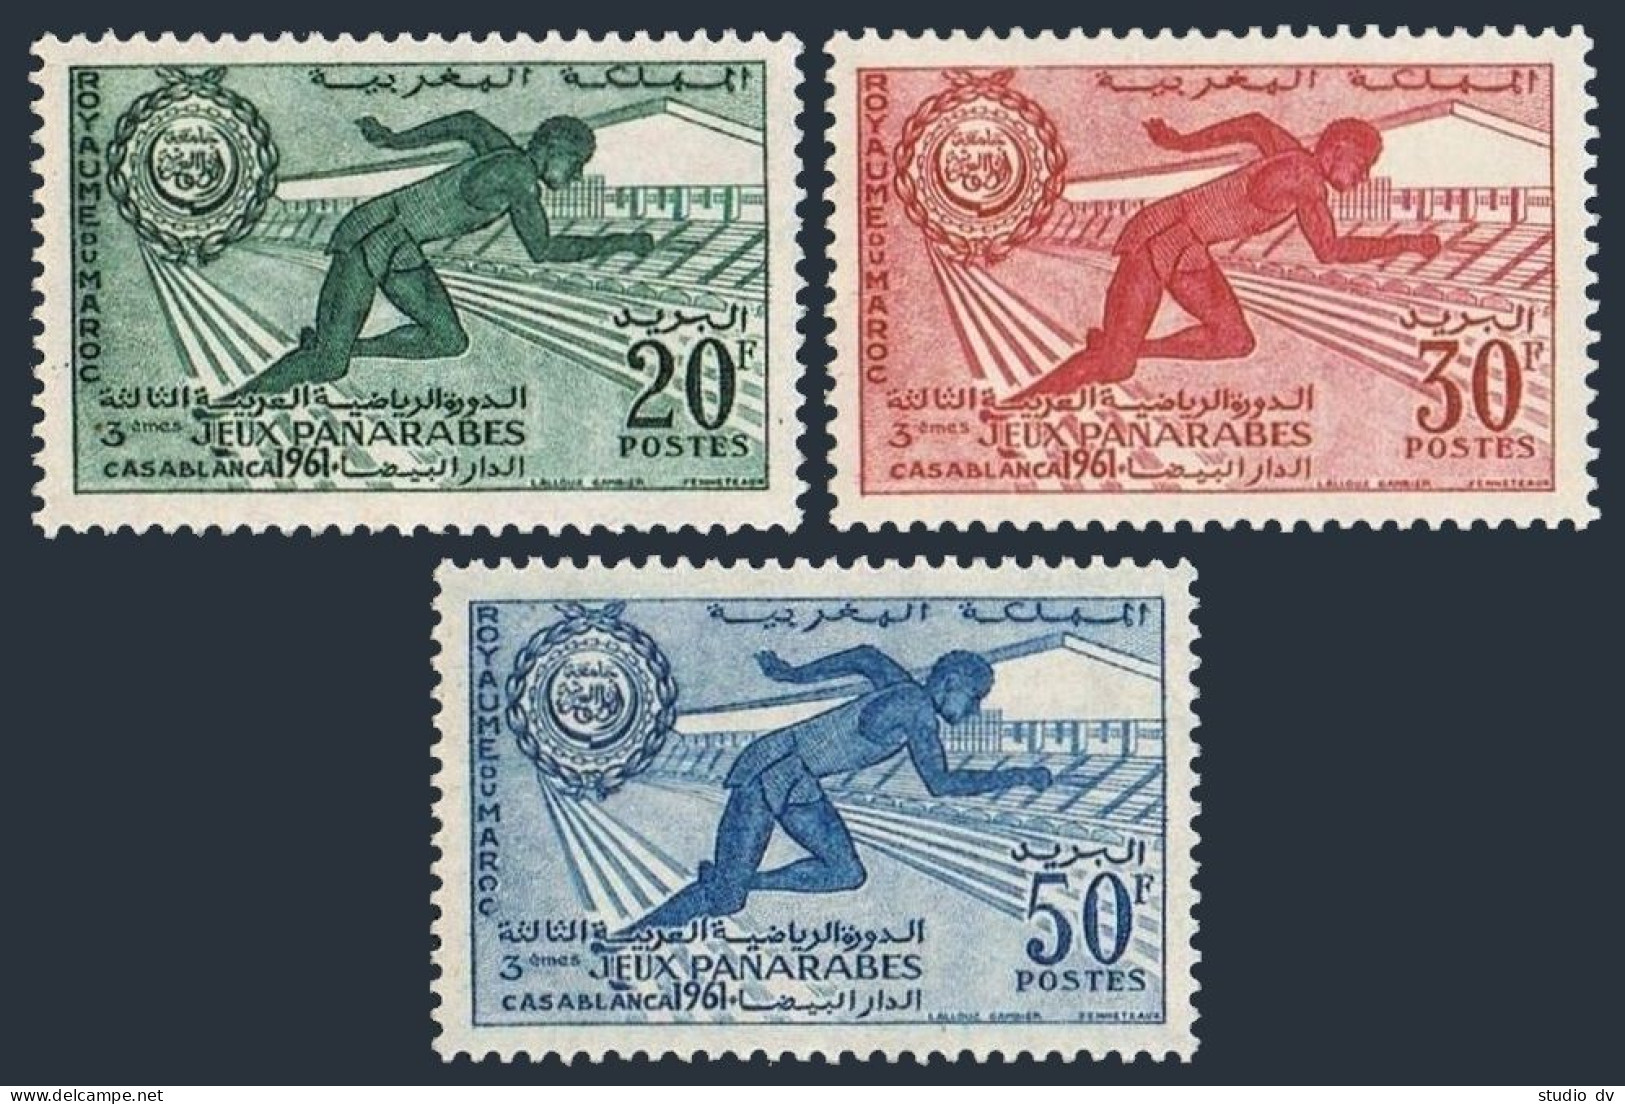 Morocco 53-55,MNH.Michel 470-472. 3rd Pan-Arabic Games,Casablanca,1961.Runner. - Morocco (1956-...)